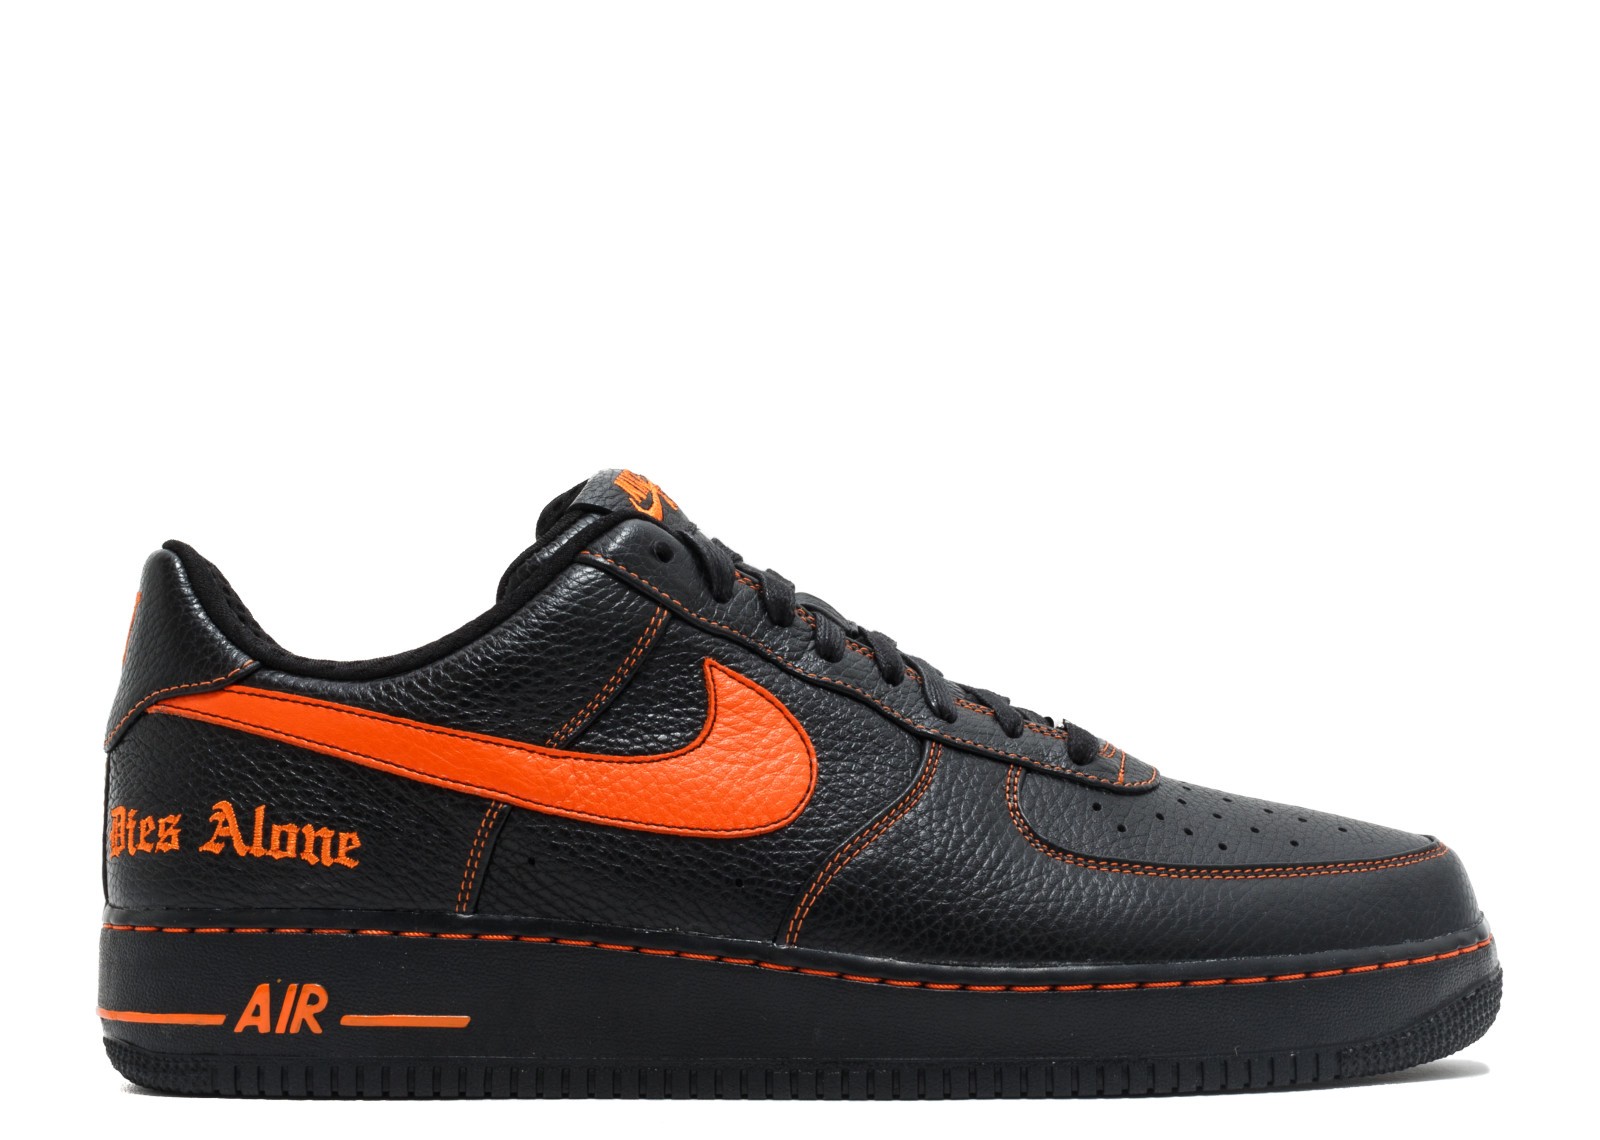 Nike Lab X Vlone Air Force 1 Vlone Orange Blaze AA5360 - Red Yeezy for Sale - 001 - StclaircomoShops